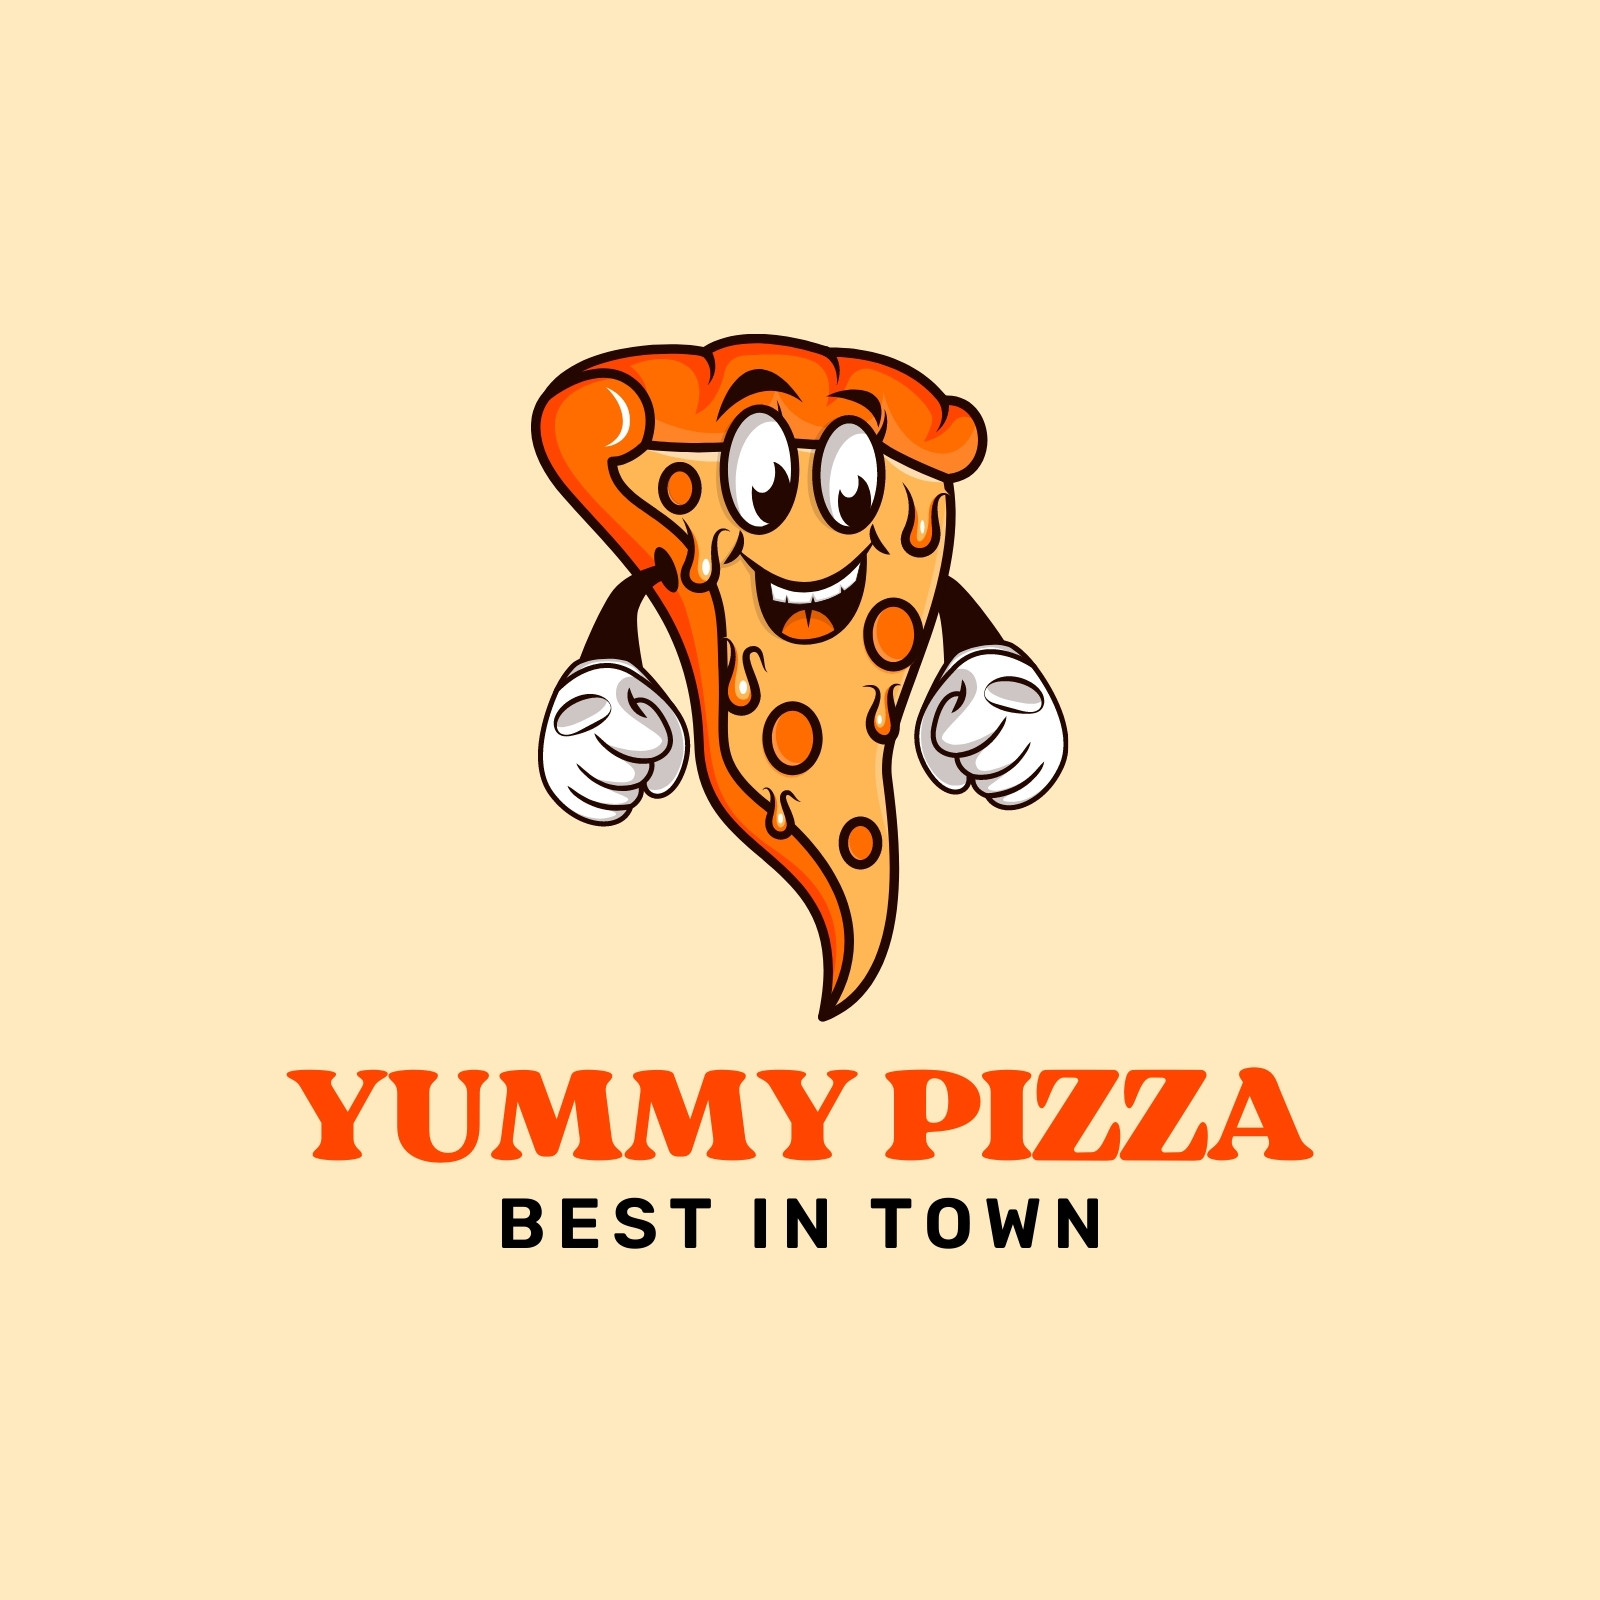 https://marketplace.canva.com/EAFf_9UNnfI/1/0/1600w/canva-colorful-playful-yummy-pizza-mascot-free-logo-6dmV0zO0tTY.jpg